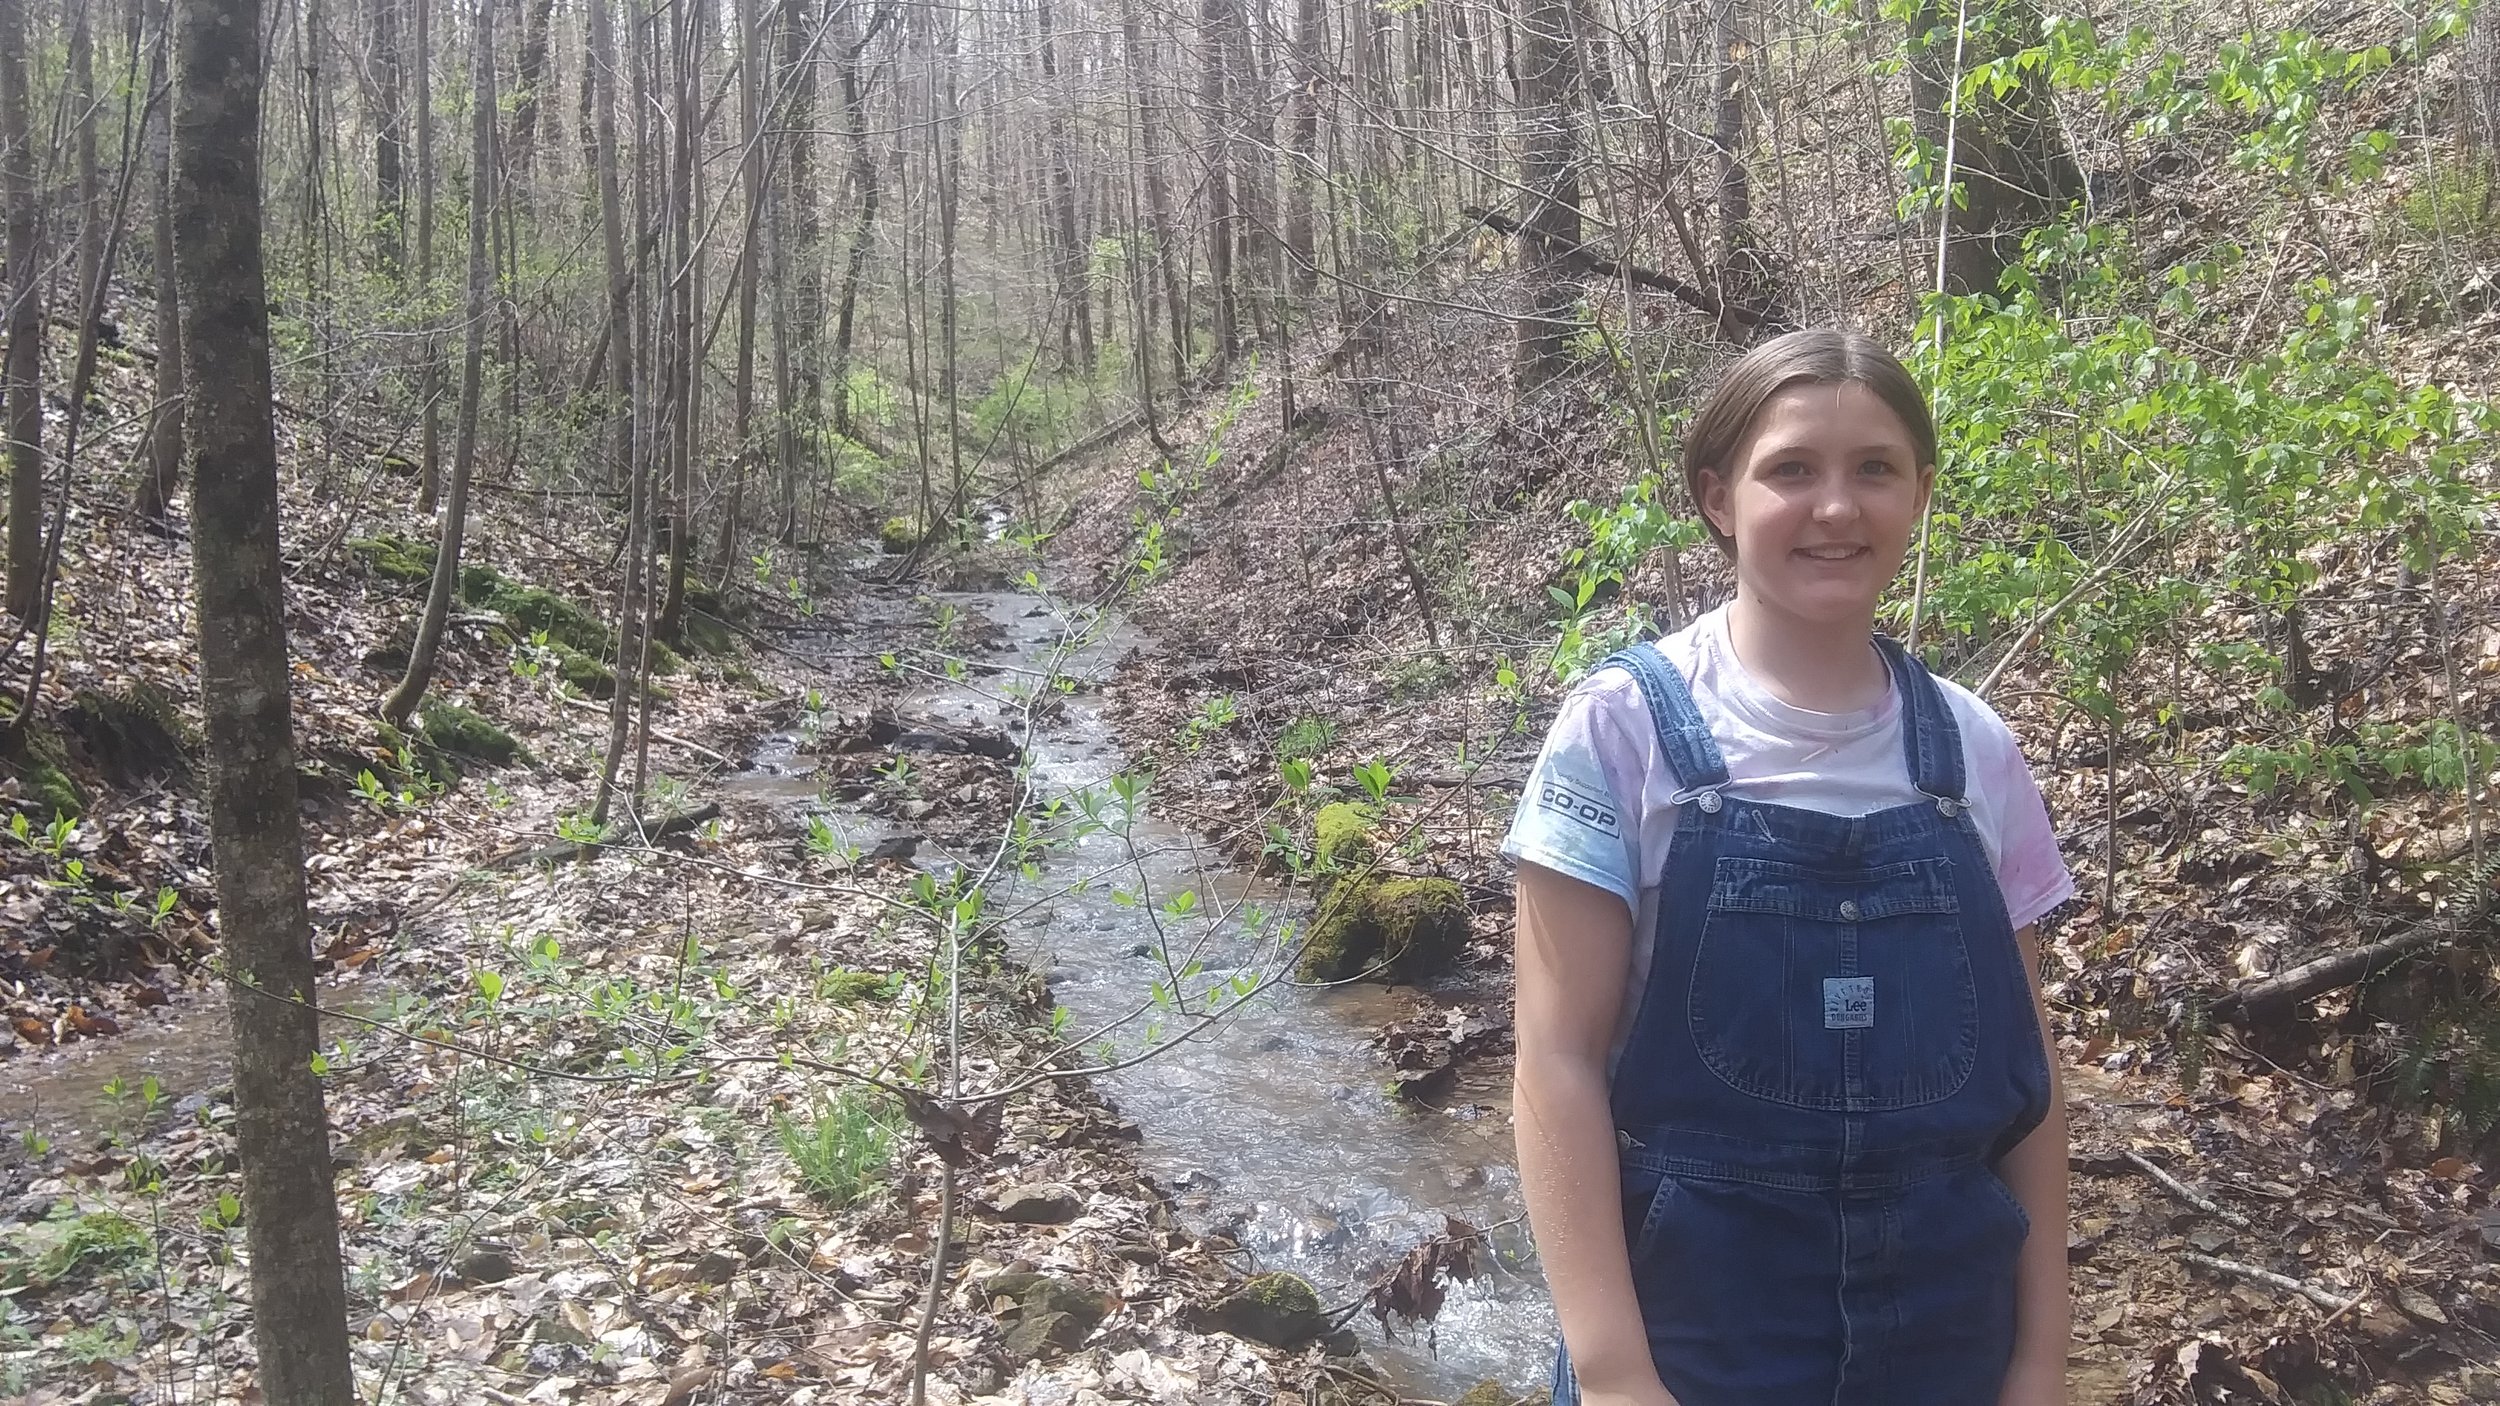  Exploring our creek 